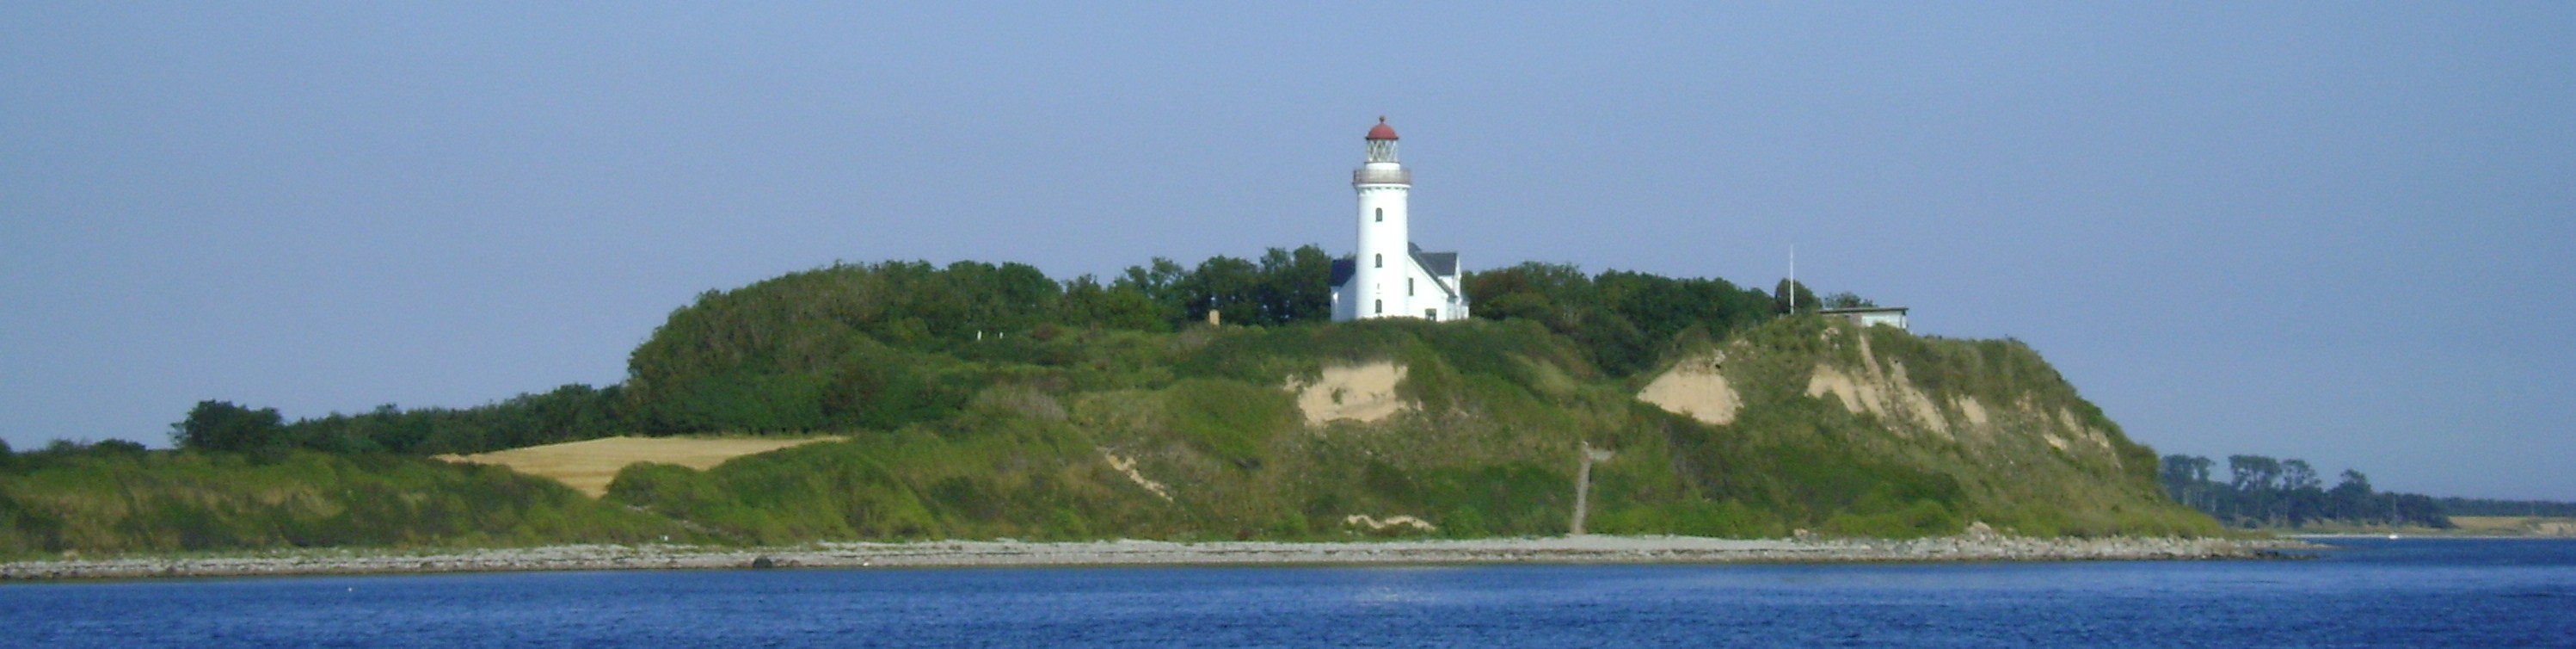 Samso lighthouse